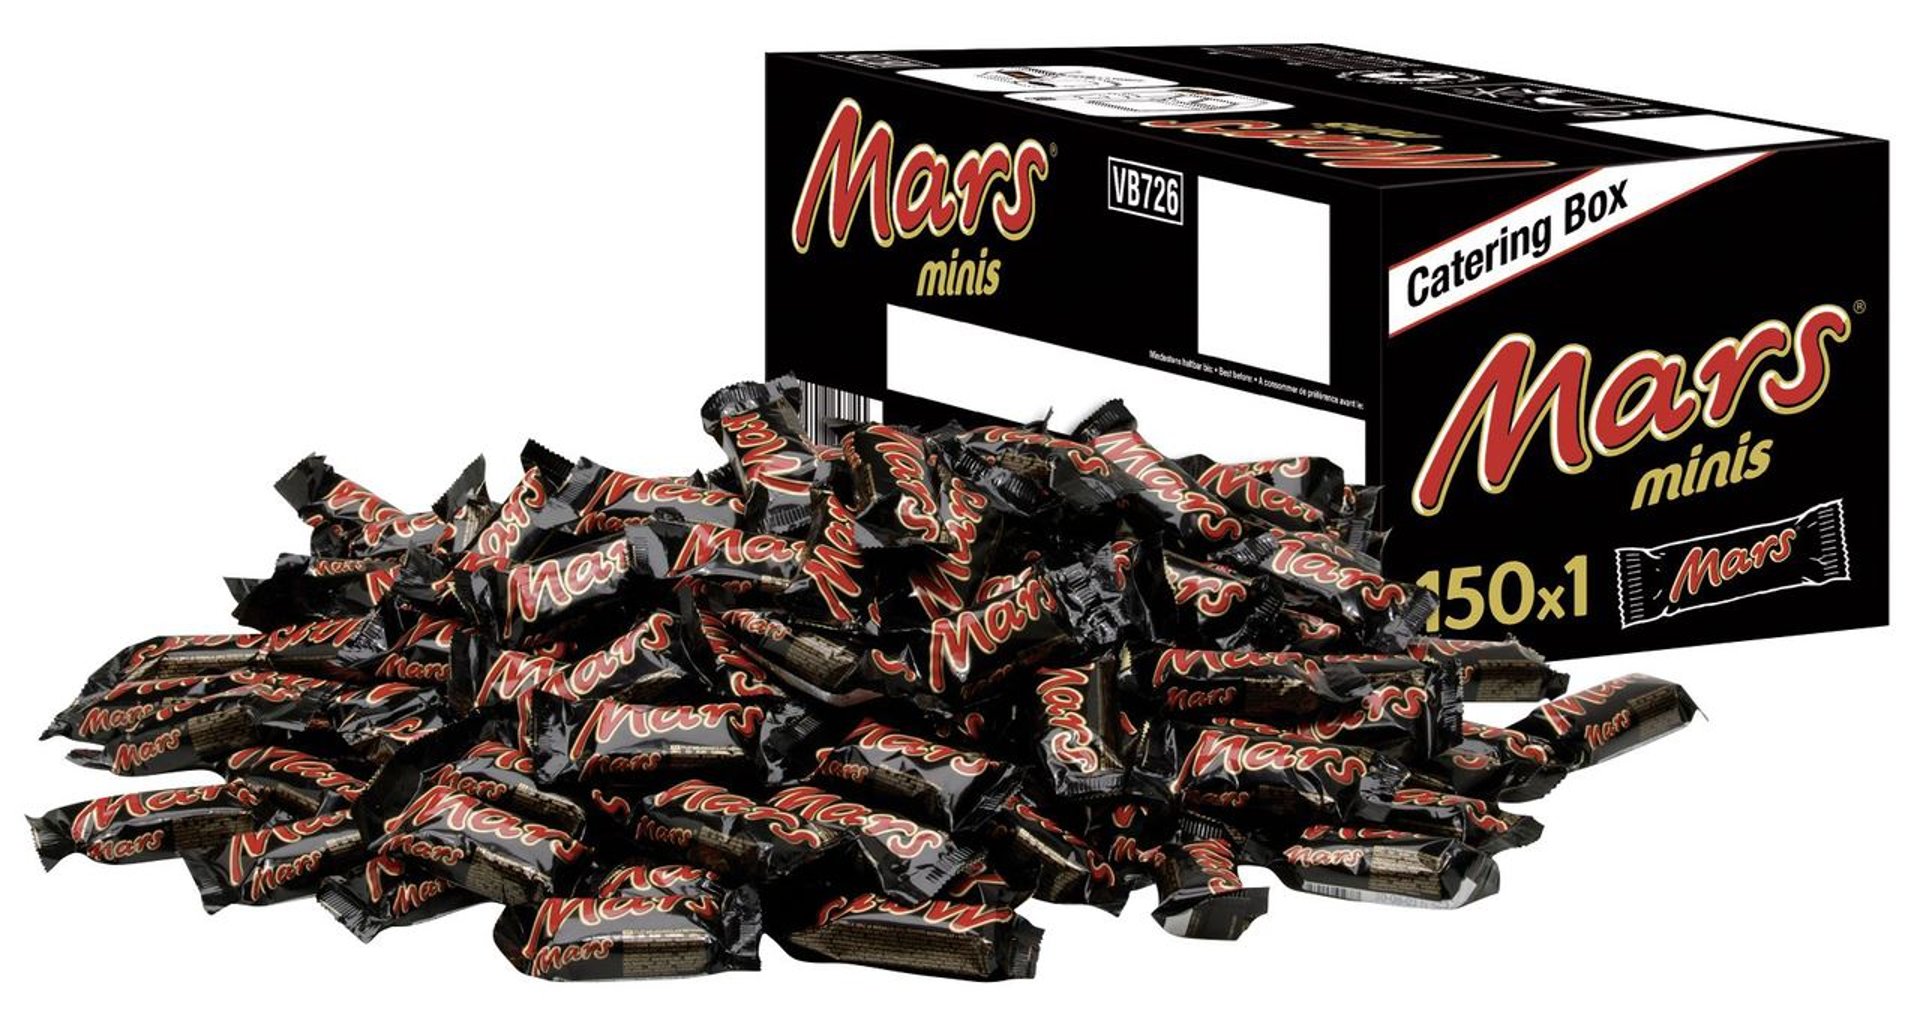 Milky Way - Schokoriegel Minis Catering Box Mars 150 Stück à 18,8 g, 2,82 kg Karton